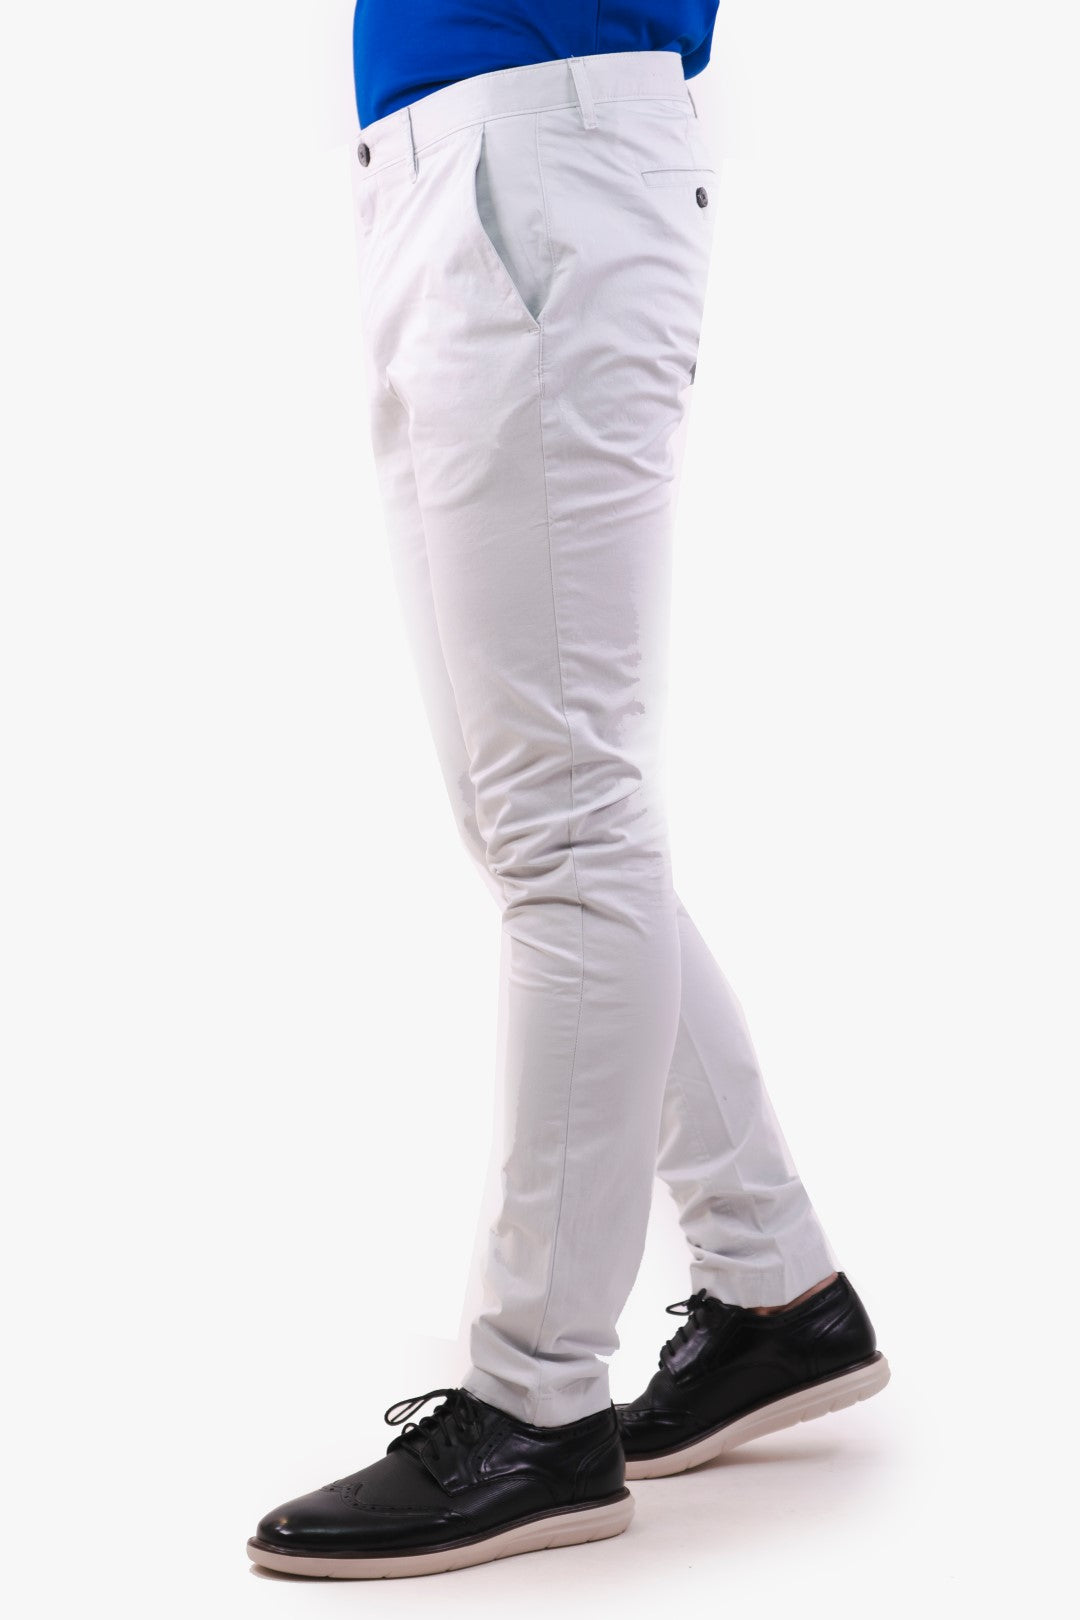 Michael Kors pants in Pale Gray color